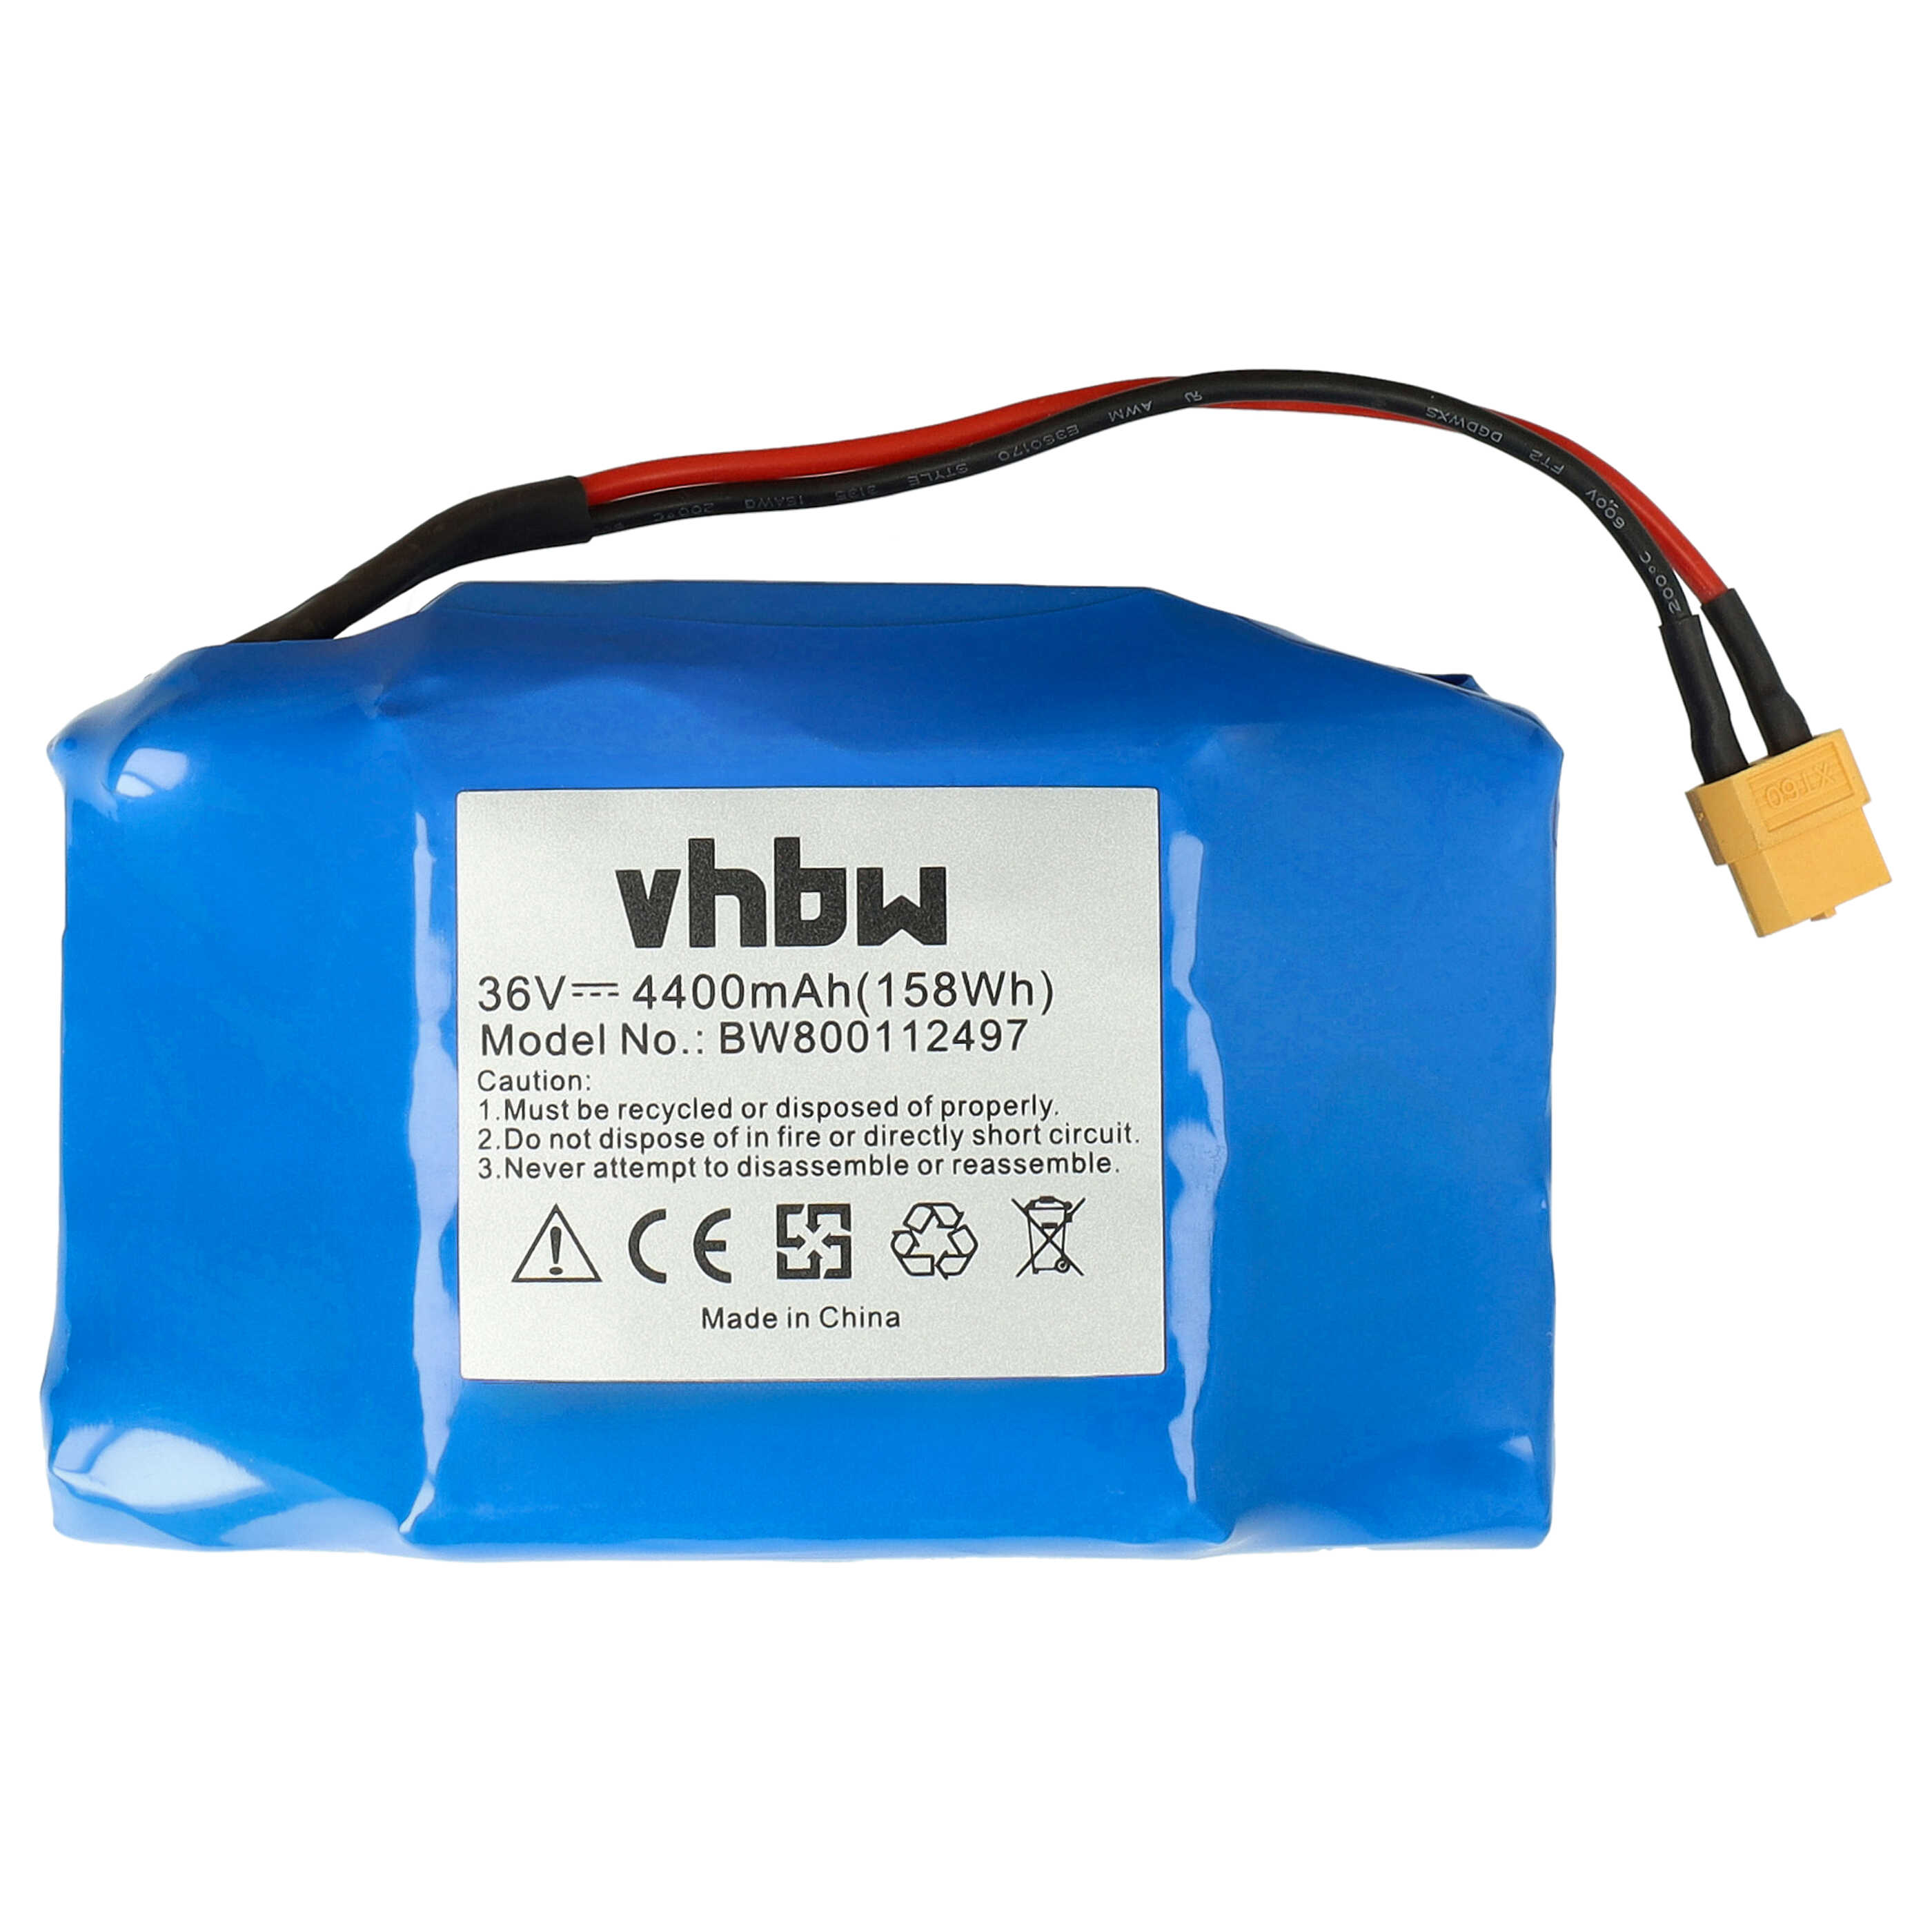 Batterie remplace Bluewheel 10IXR19/65-2, HPK-11 pour gyropode - 4400mAh 36V Li-ion